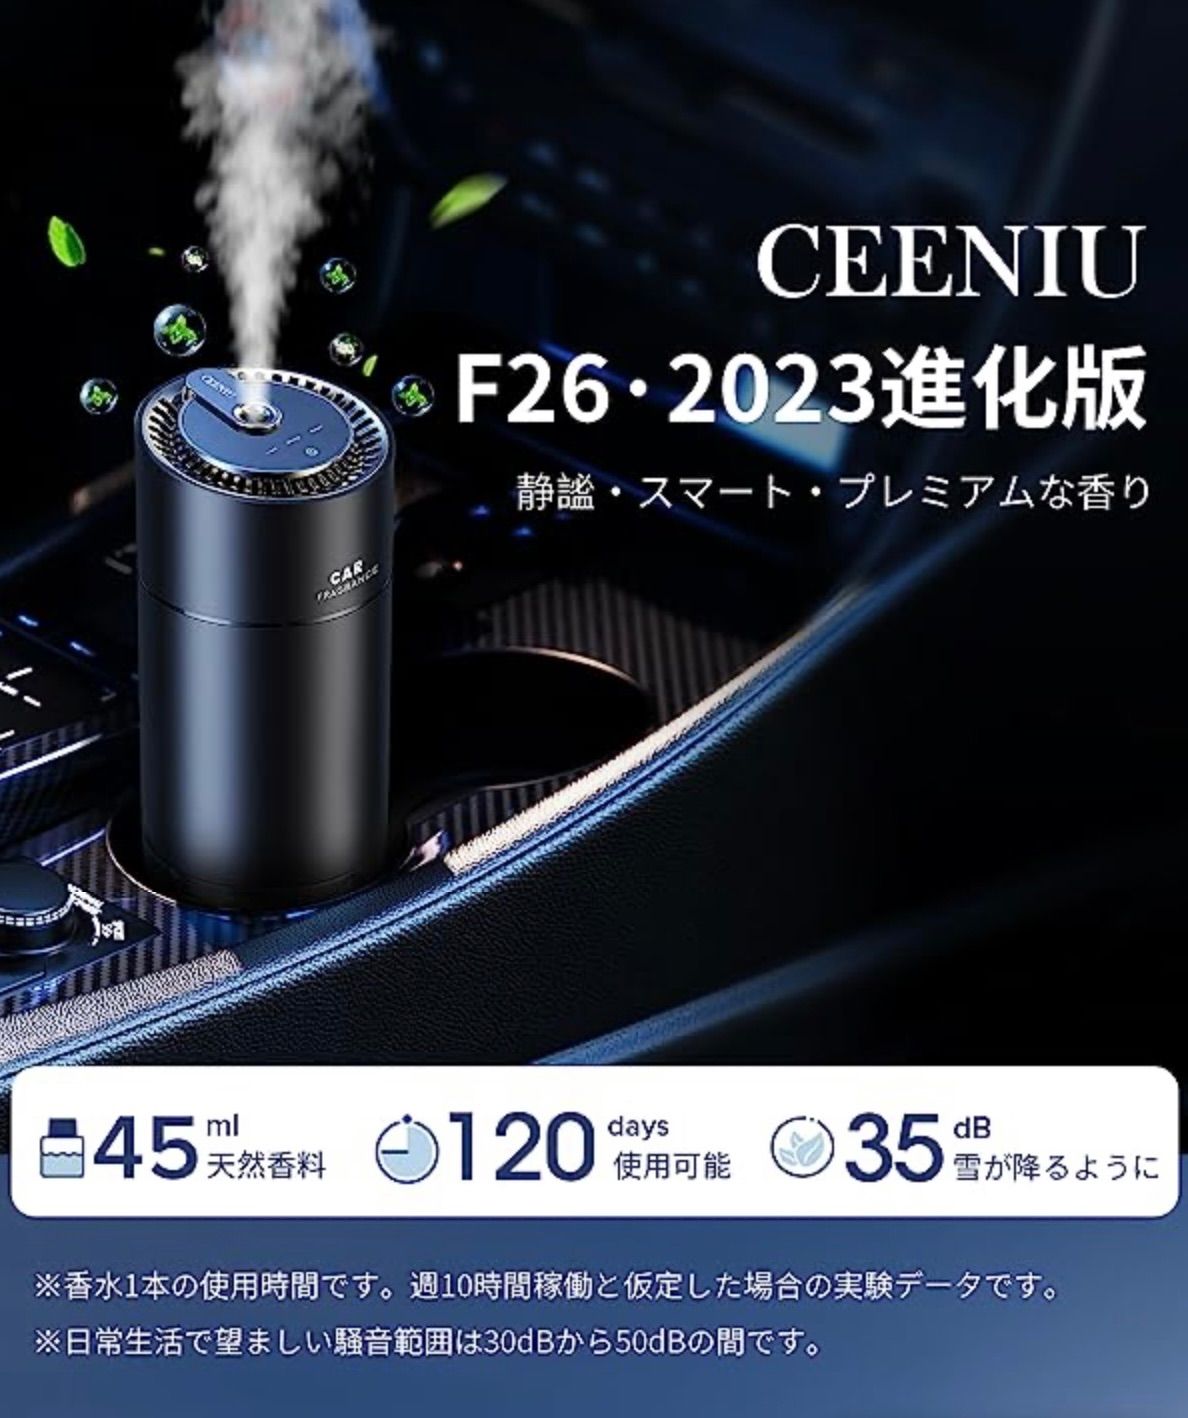 CEENIU 車用 アロマディフューザー 2023新型 静音 スマートモード バッテリー内蔵 フランス産天然香料 シーニュー F26 車用芳香剤  小さいな贅沢 メルカリ